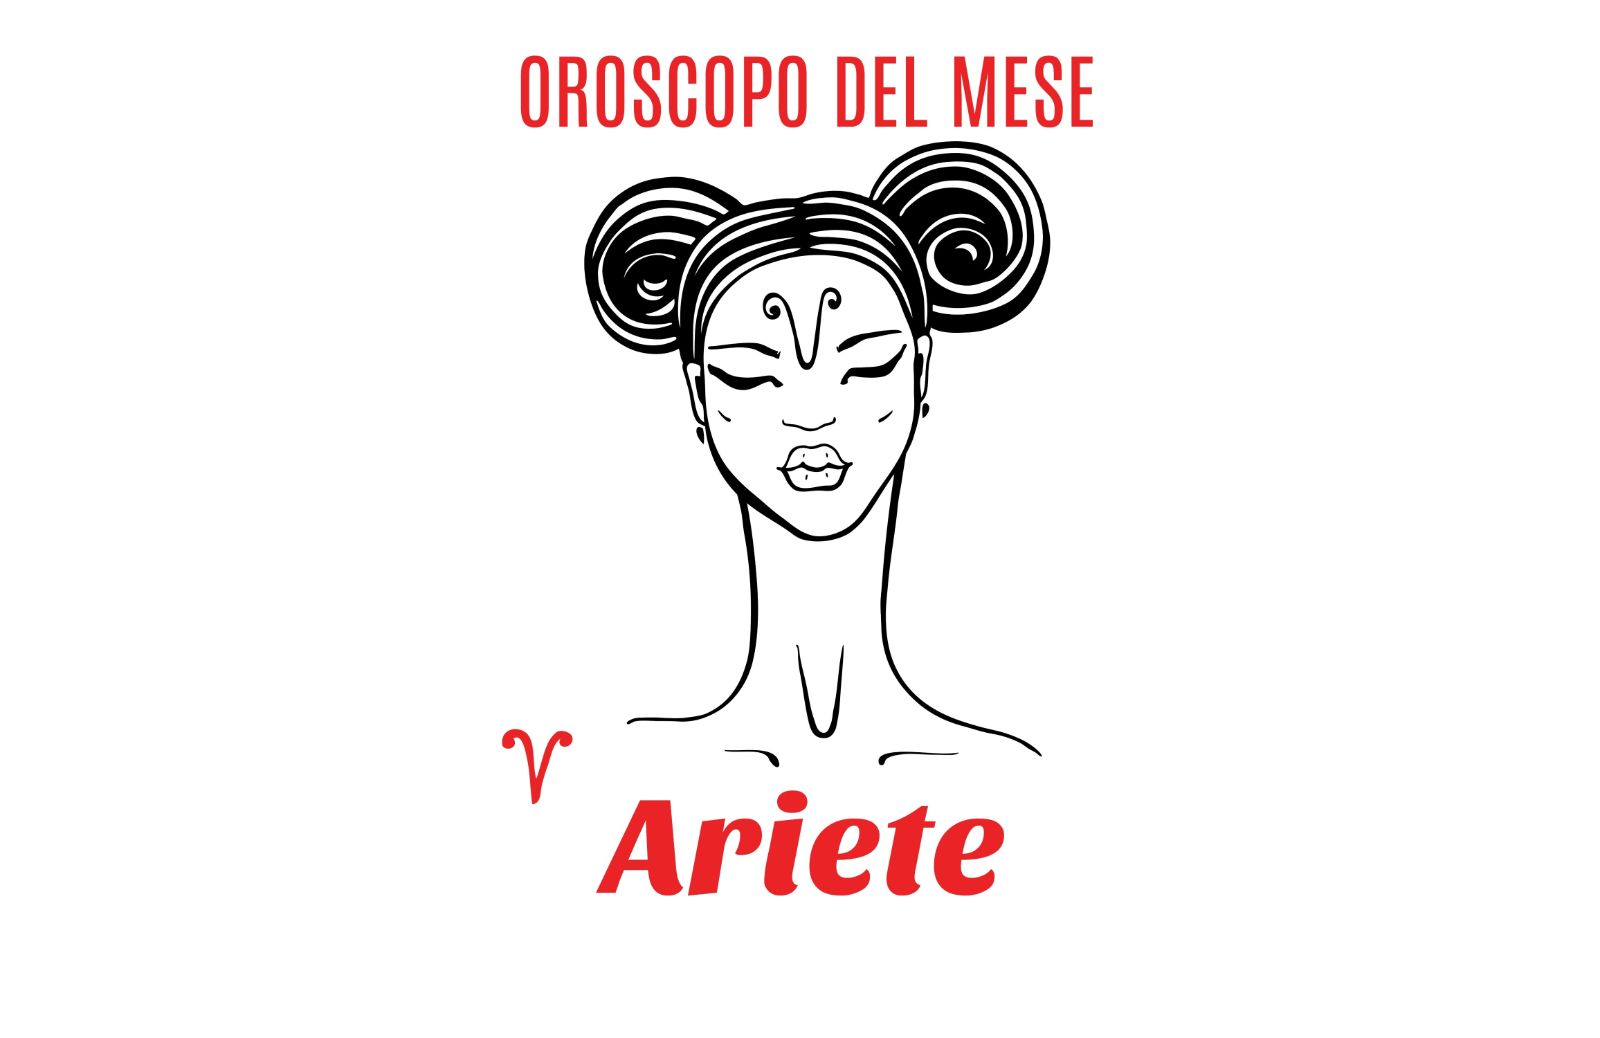 Oroscopo del mese: Ariete - ottobre 2018